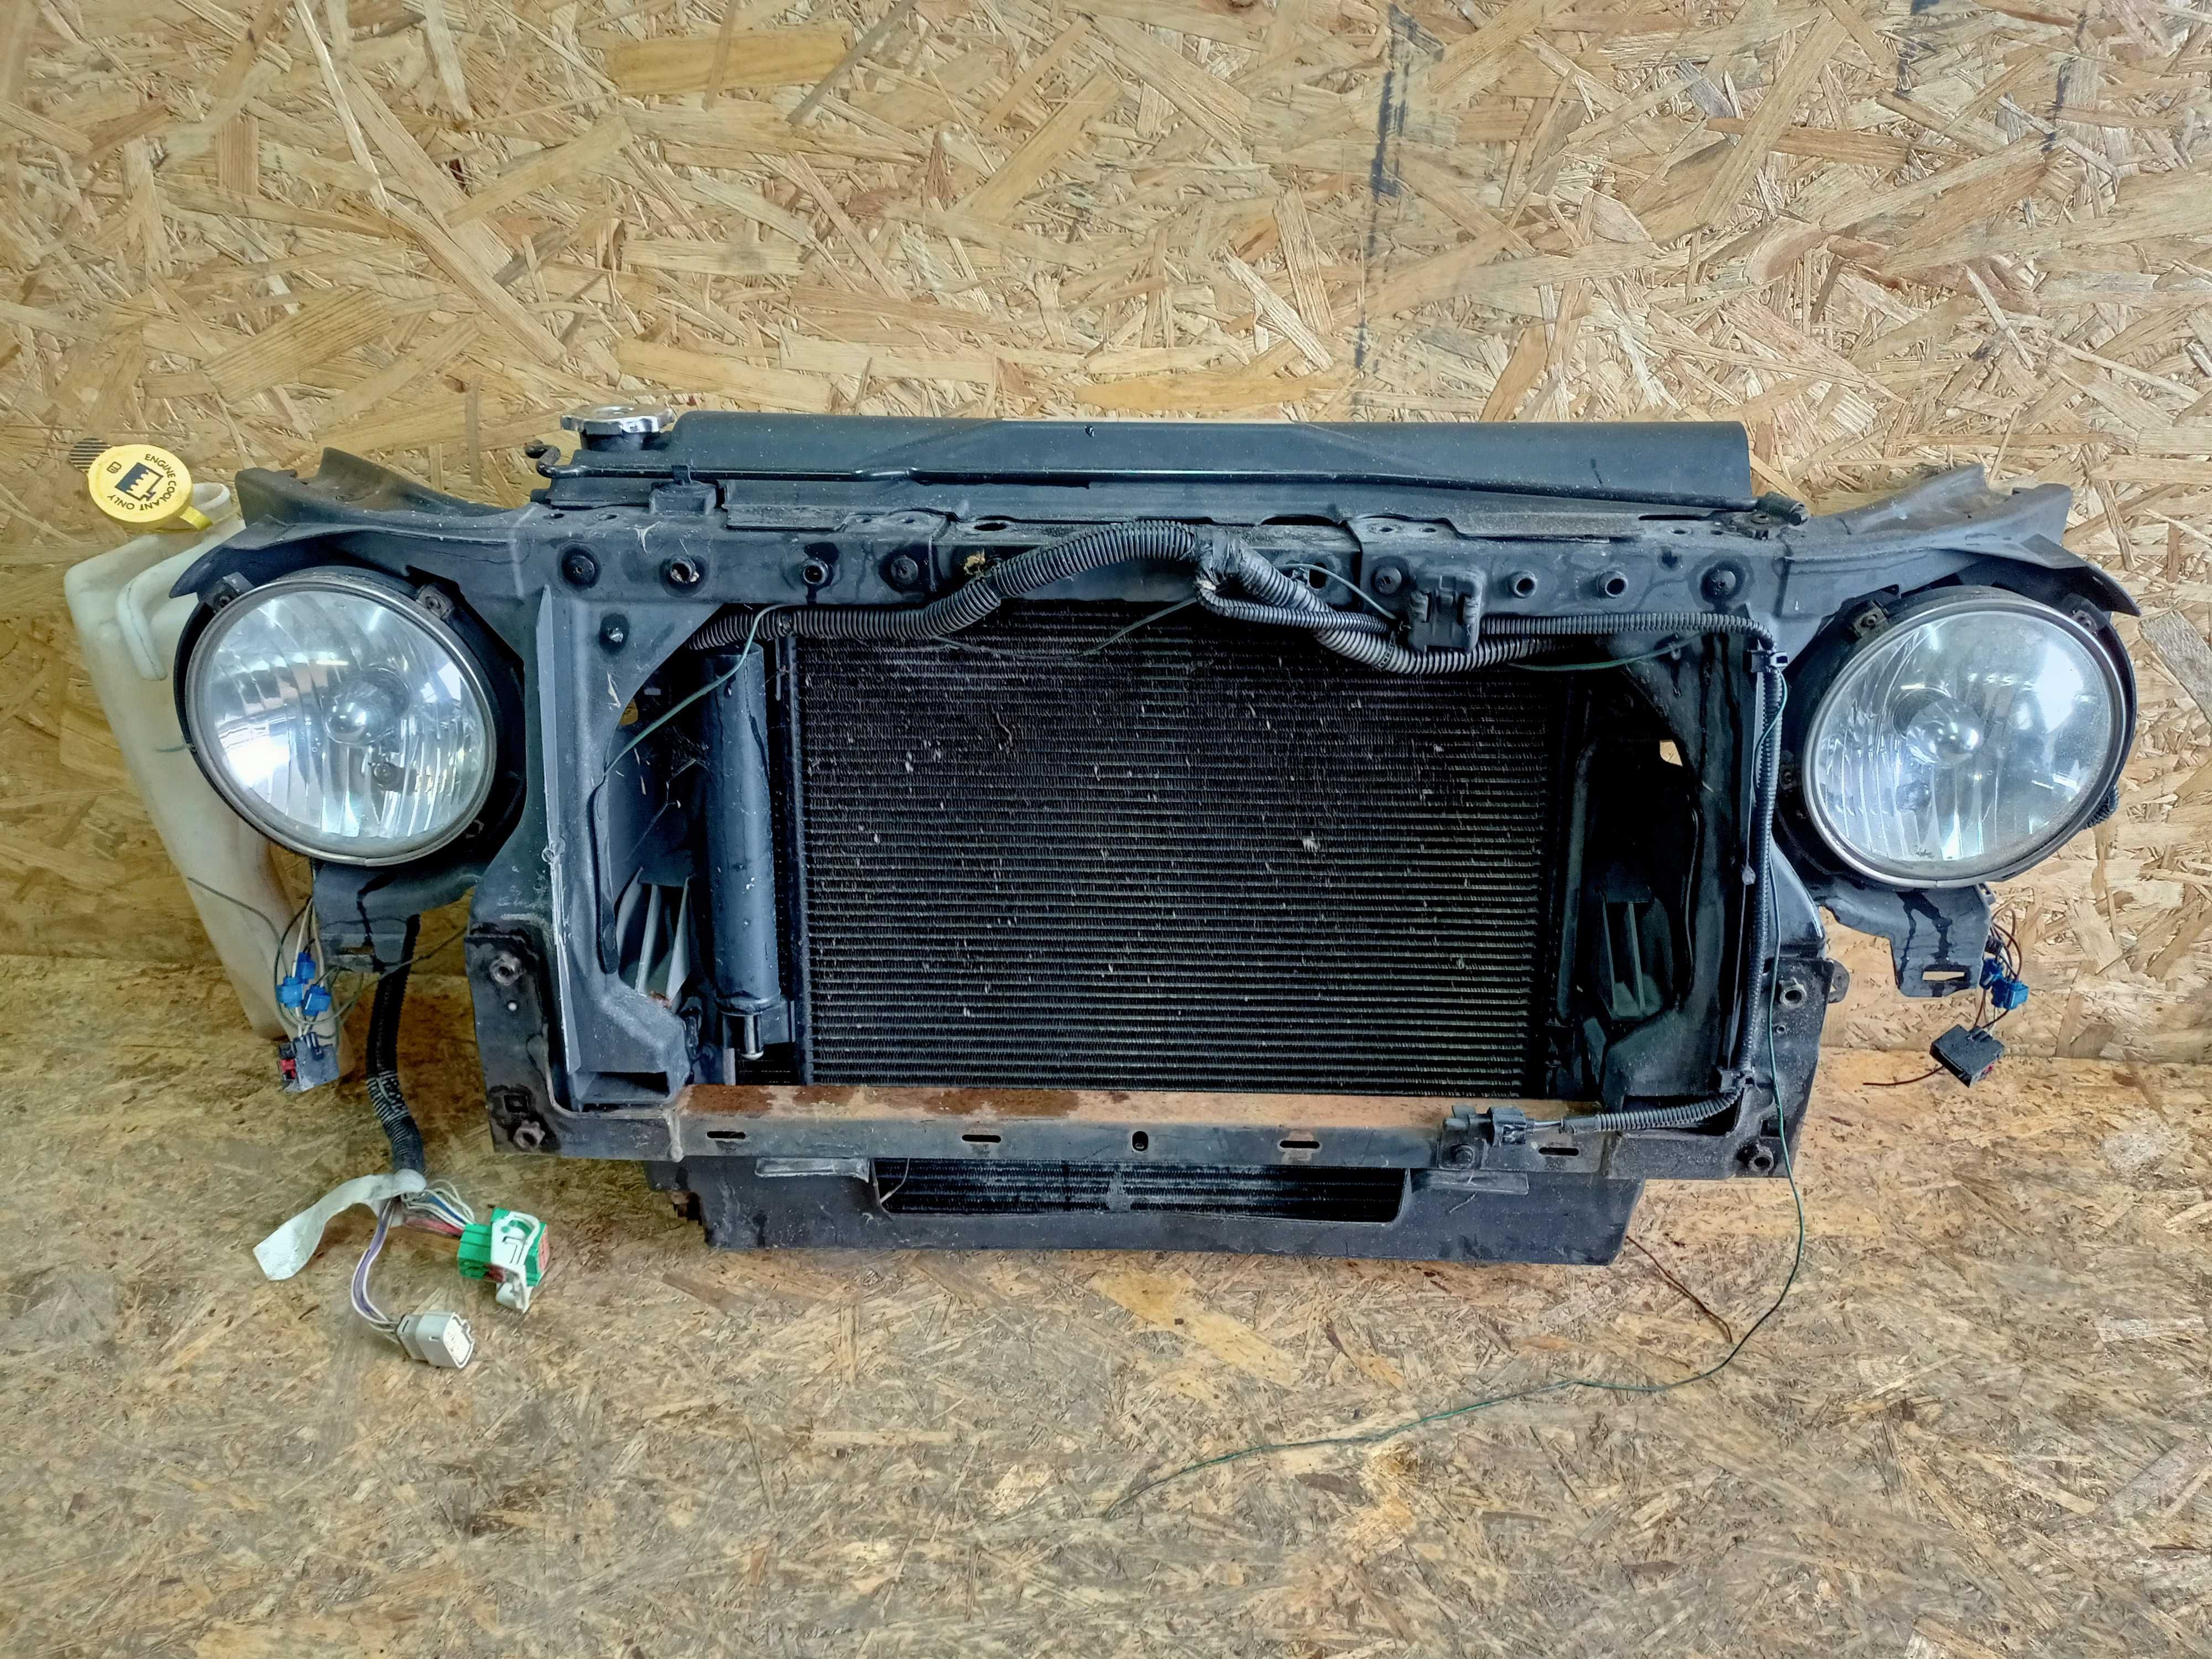 Jeep Wrangler JK pas przedni przód lampy kompletny V6 3.8 benzyna